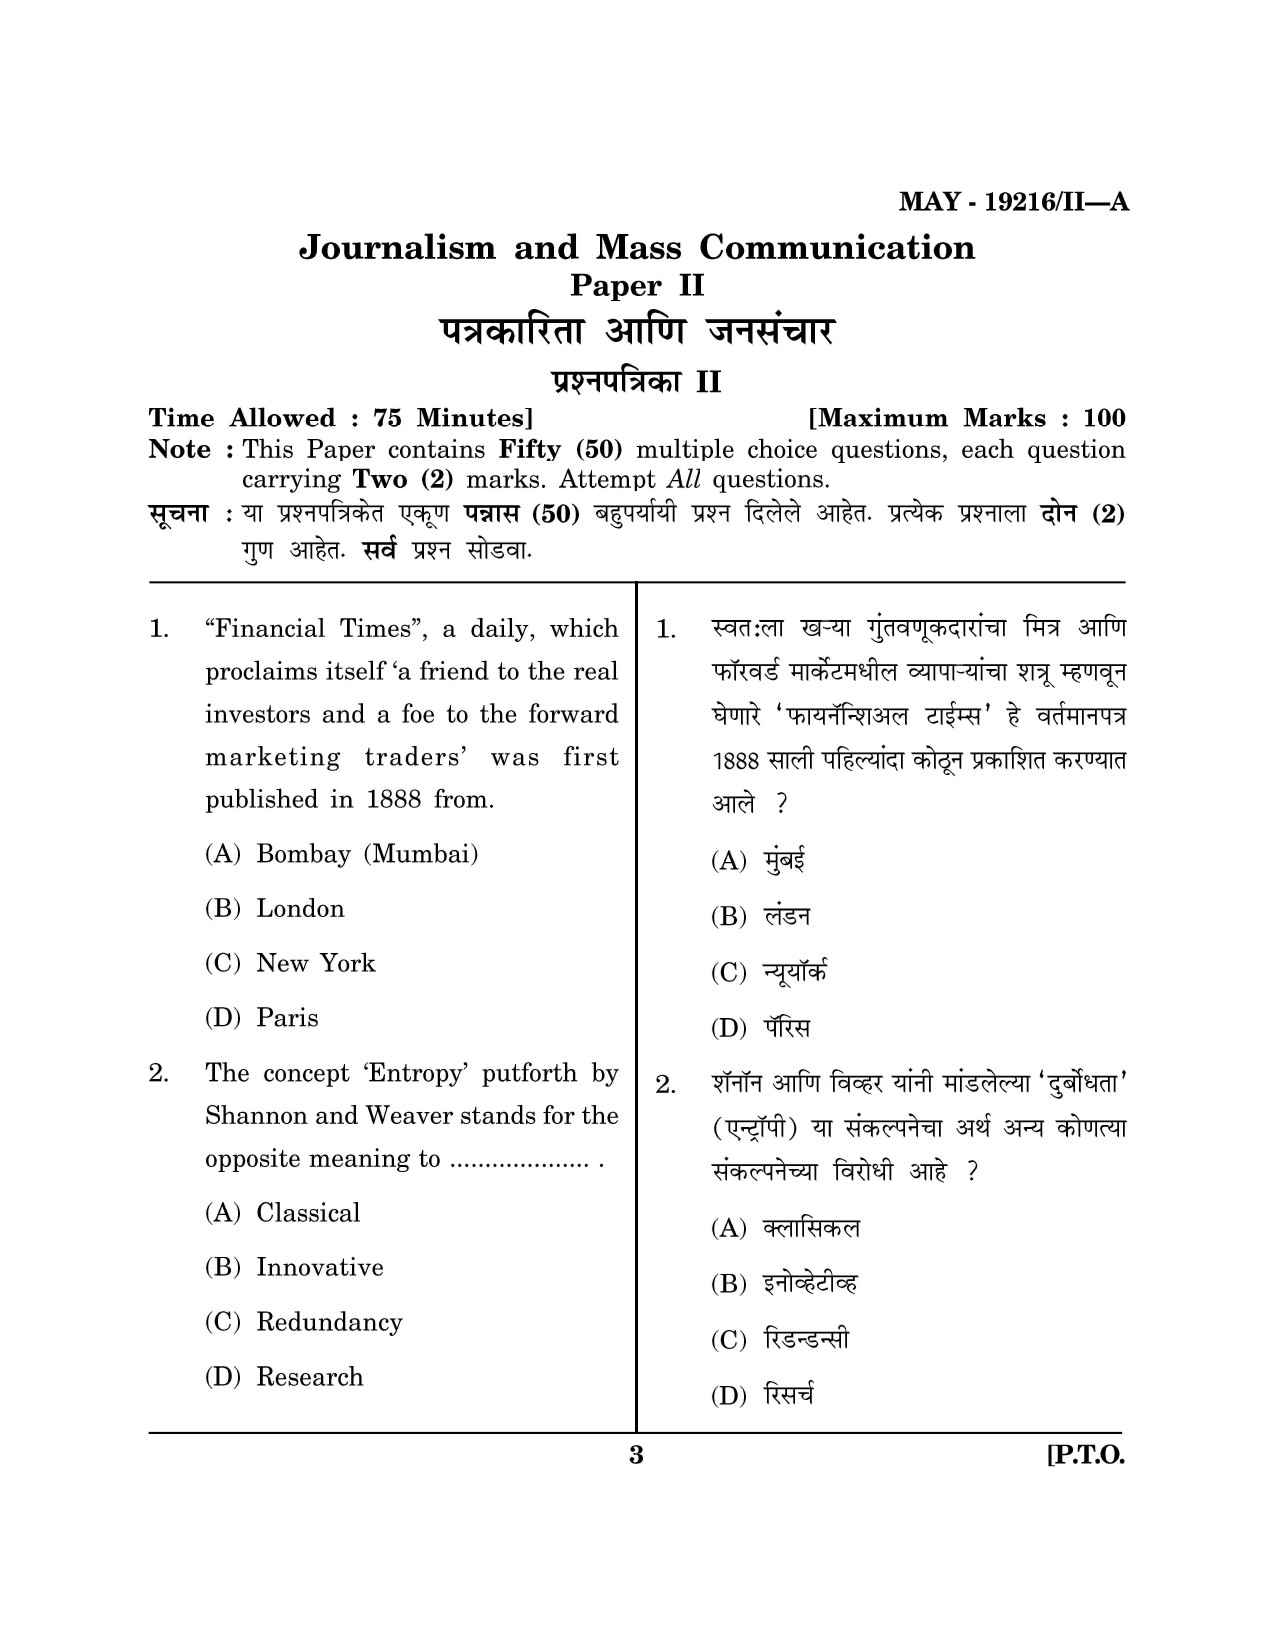 Maharashtra SET Journalism and Mass Communication Question Paper II May 2016 2